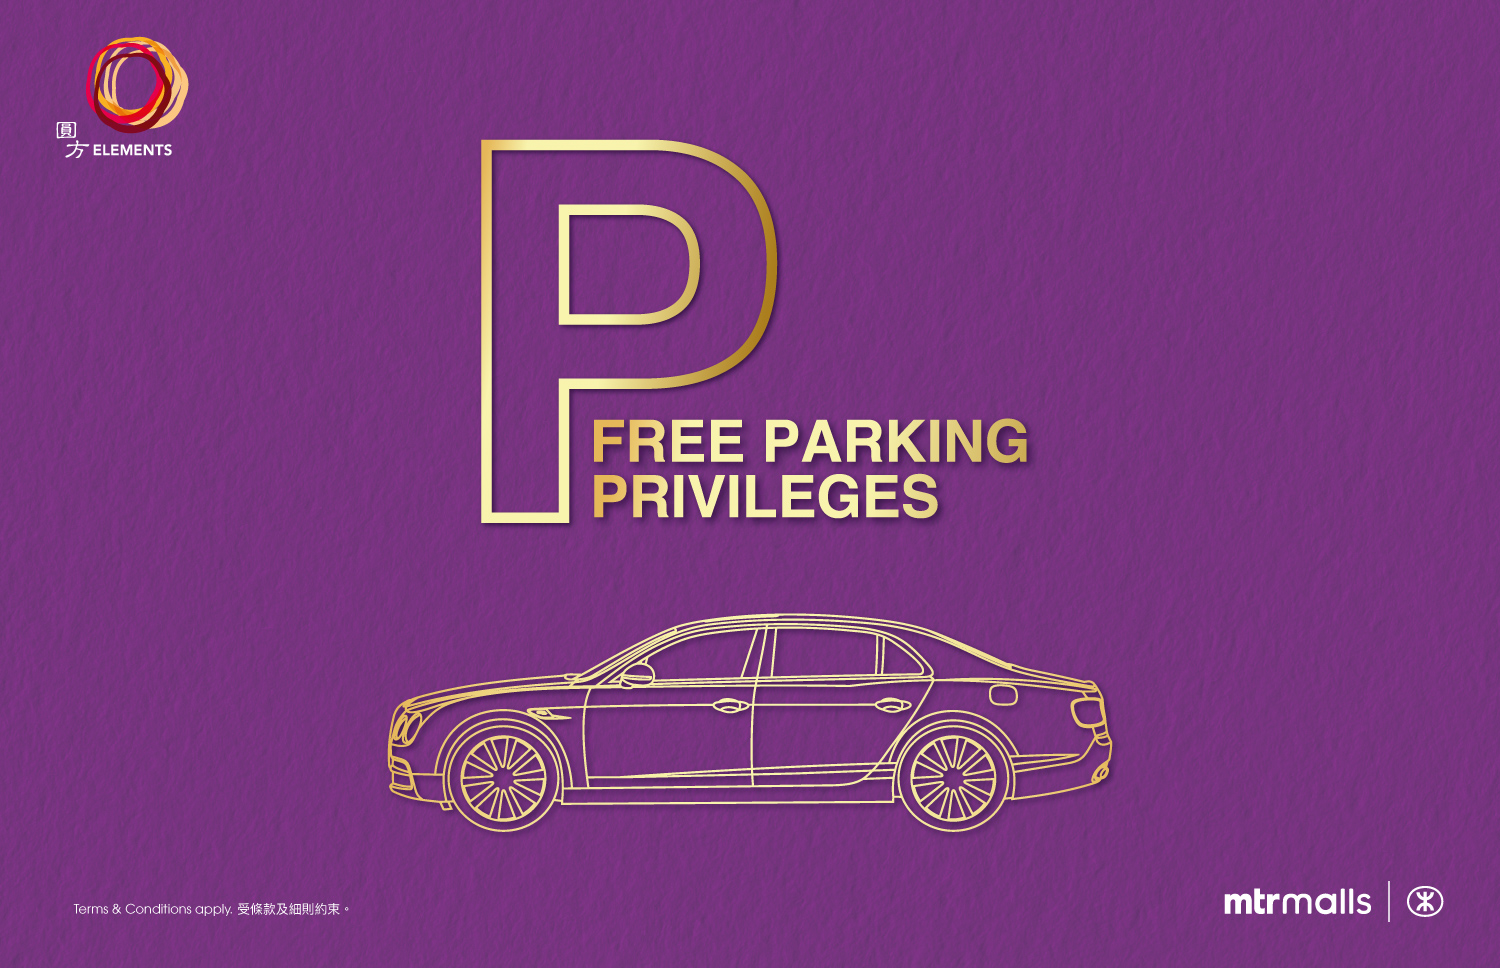 Parking 3 2022 Promotion Popup Banner 1500x968px 